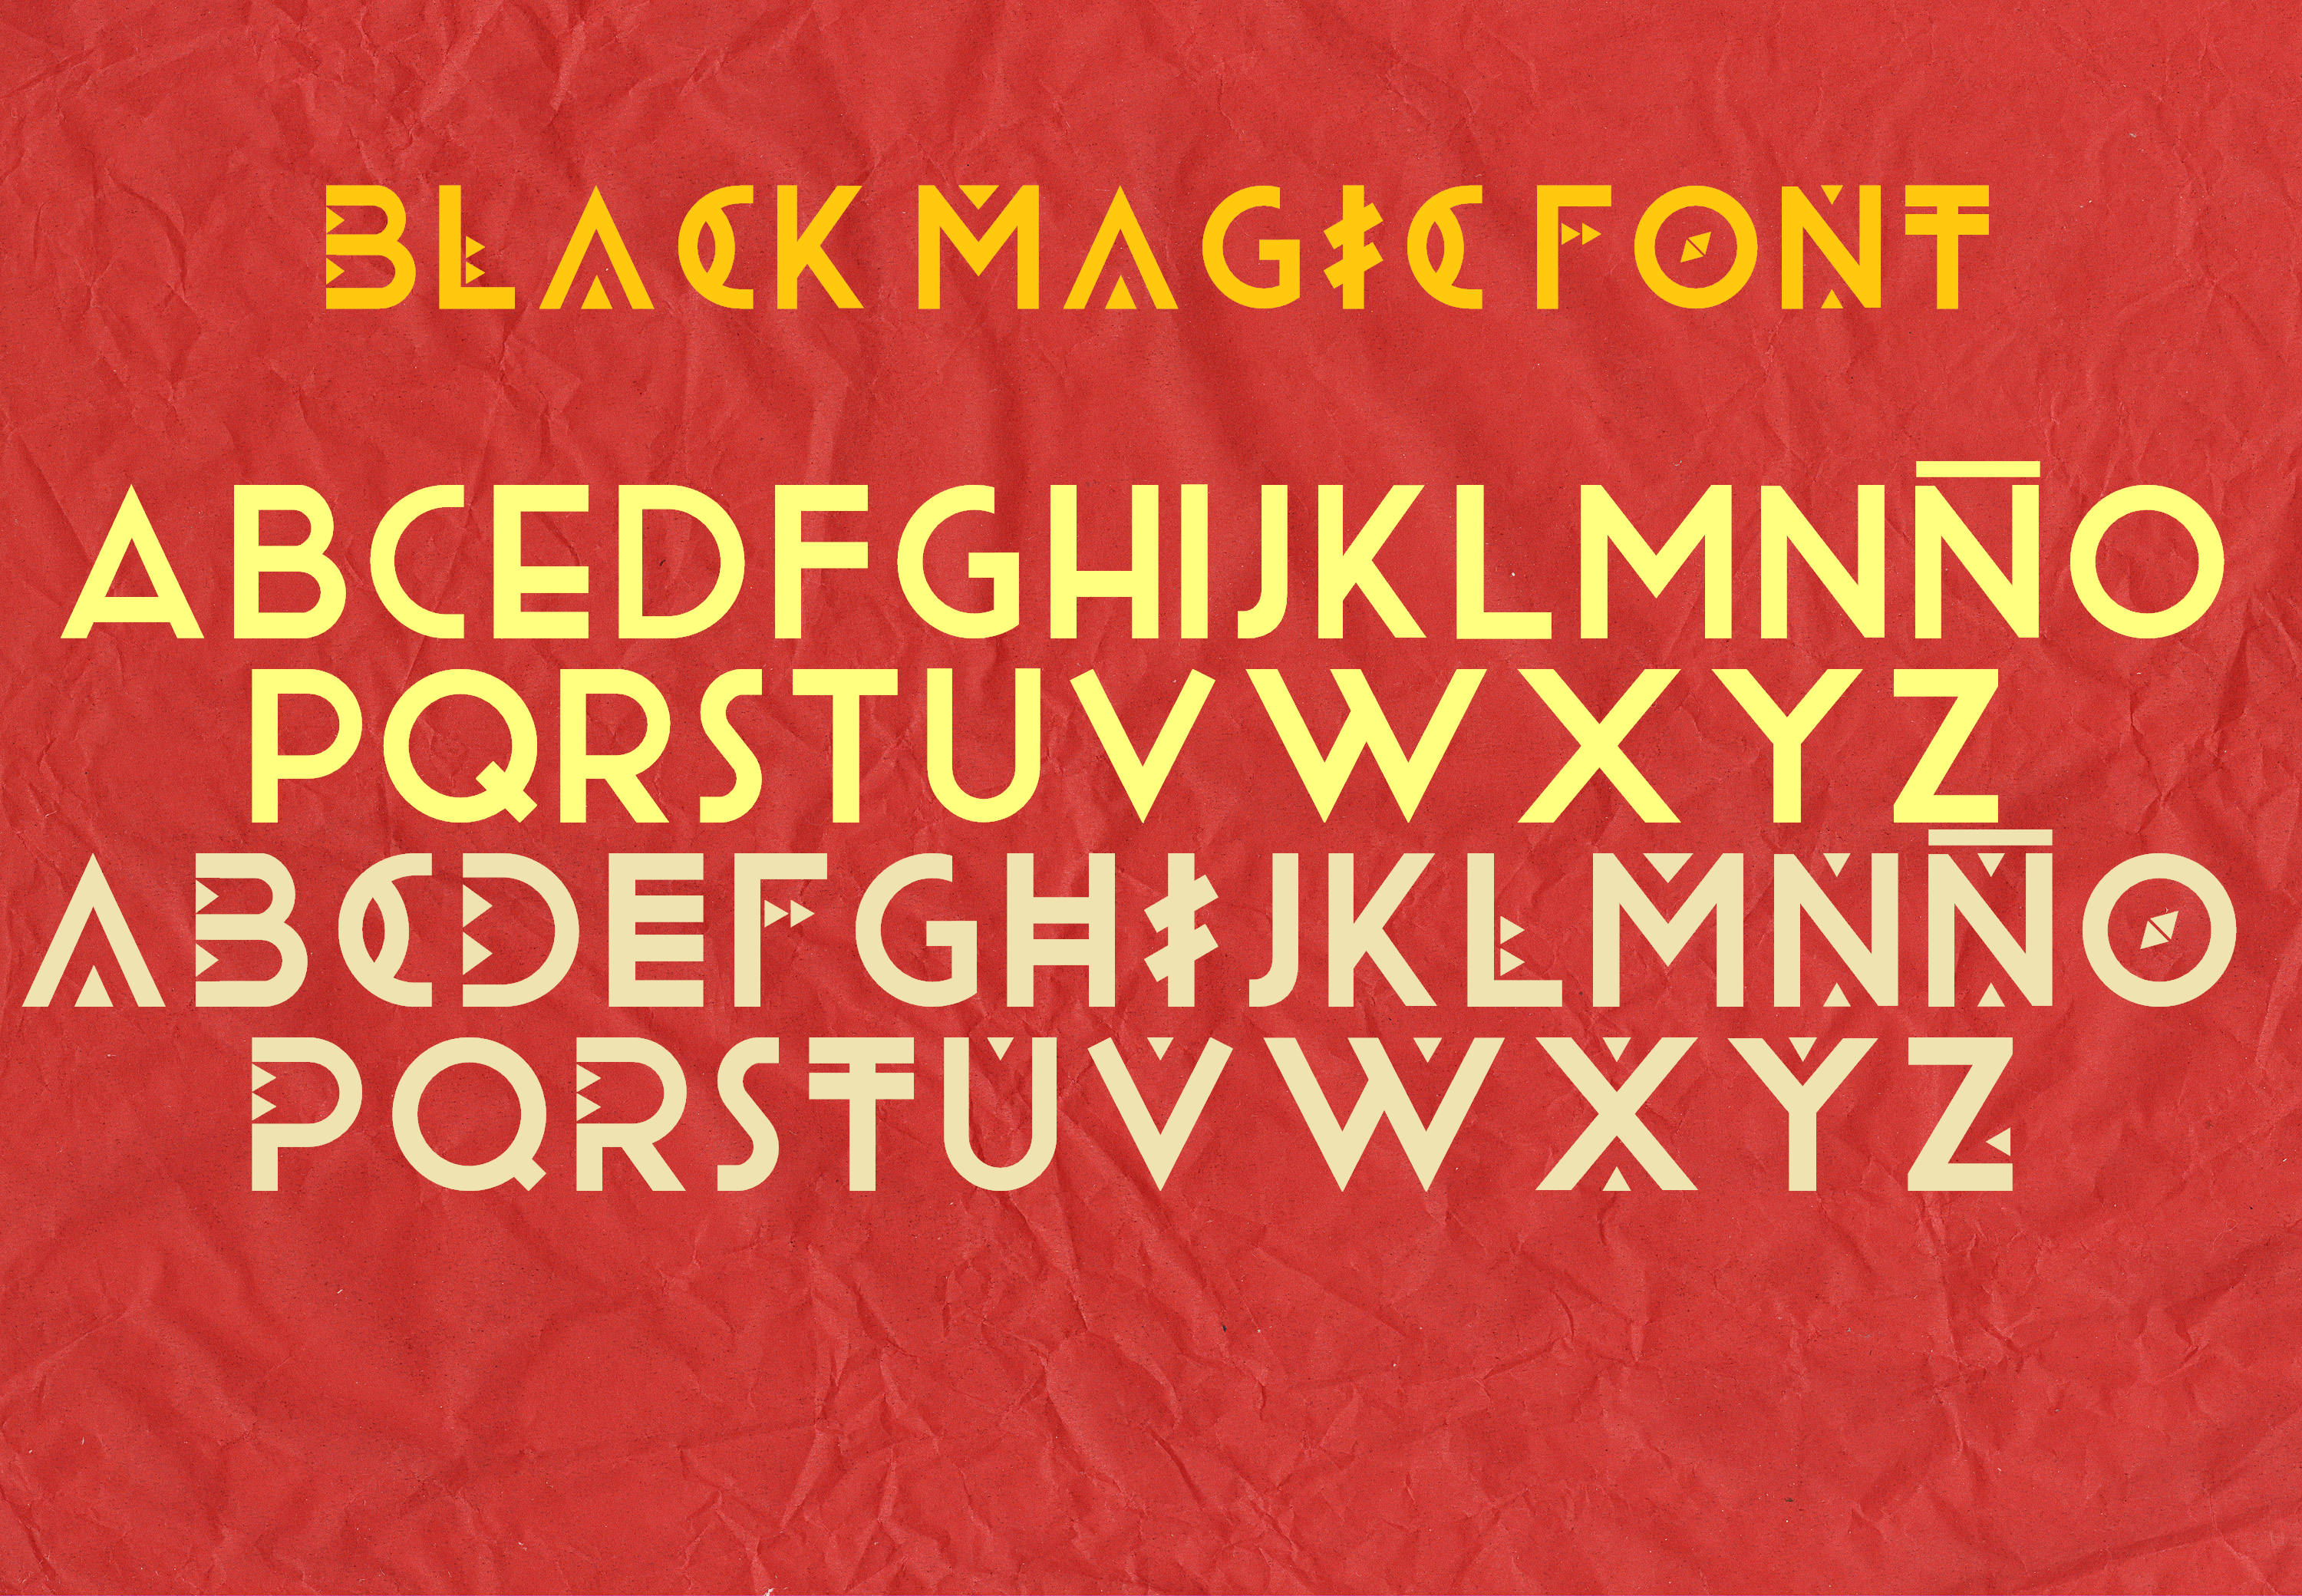 Black Magic Little Mix Font By Angeldavidcs On Deviantart